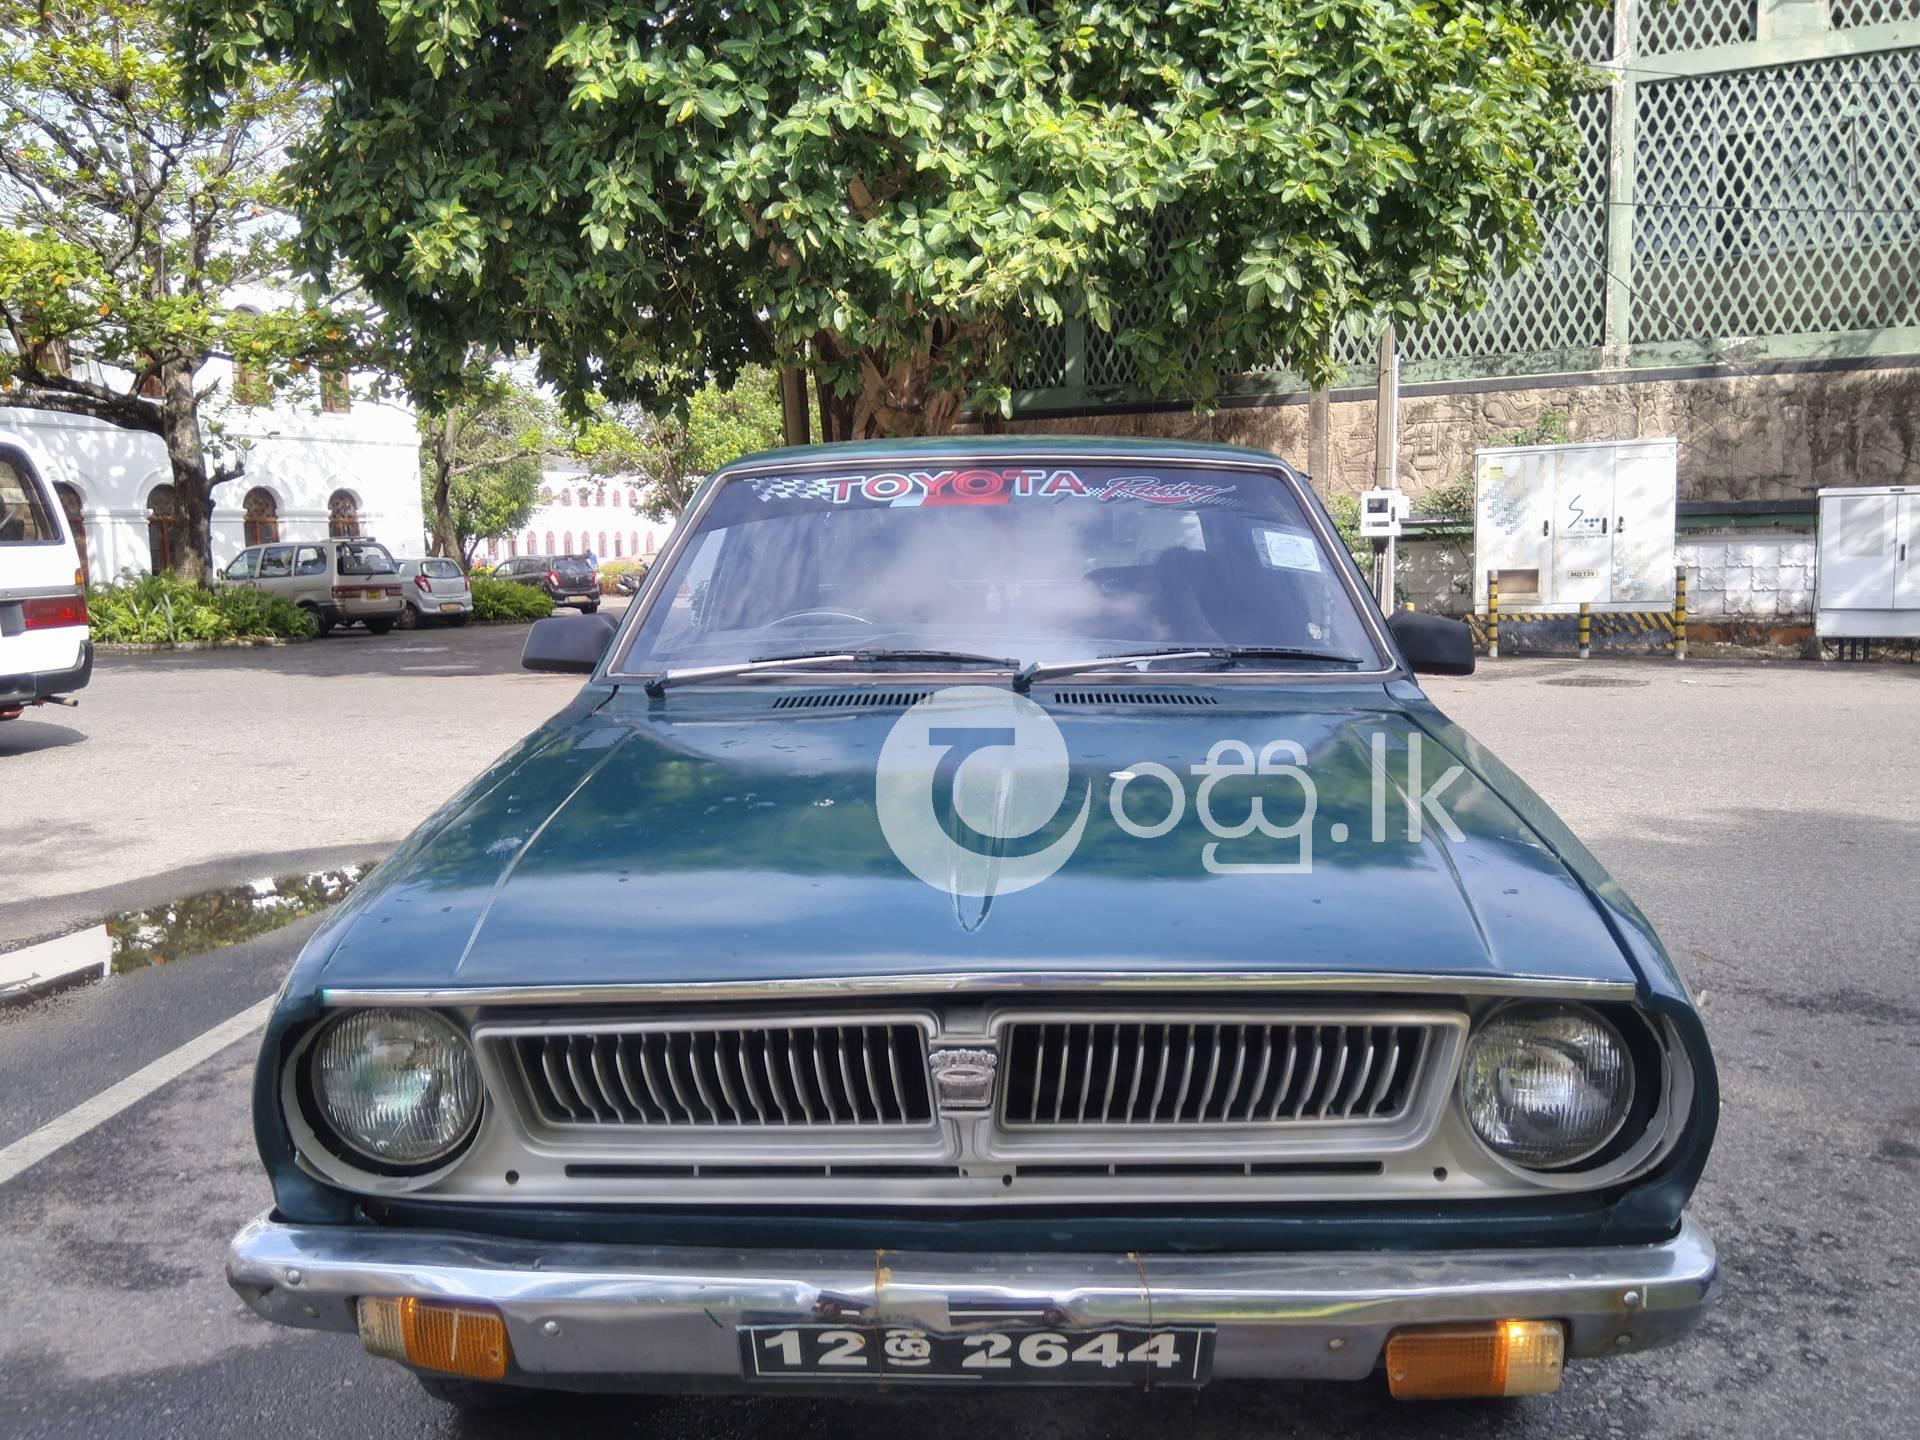 Corolla KE50 for sale Cars in Mahiyanganaya